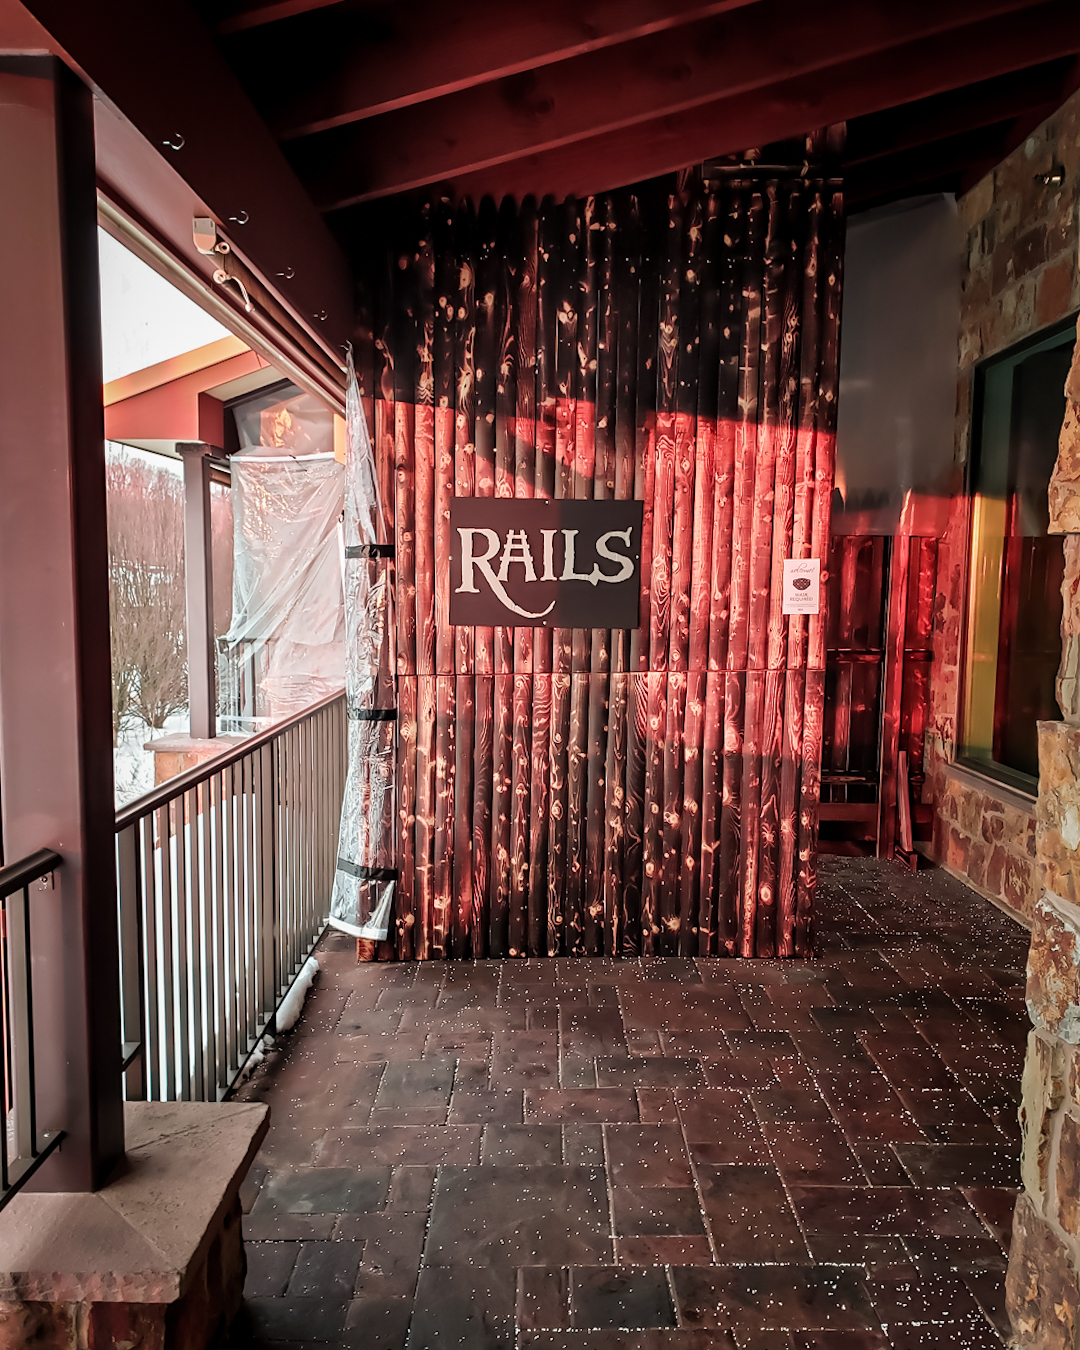 rails steakhouse wine cave